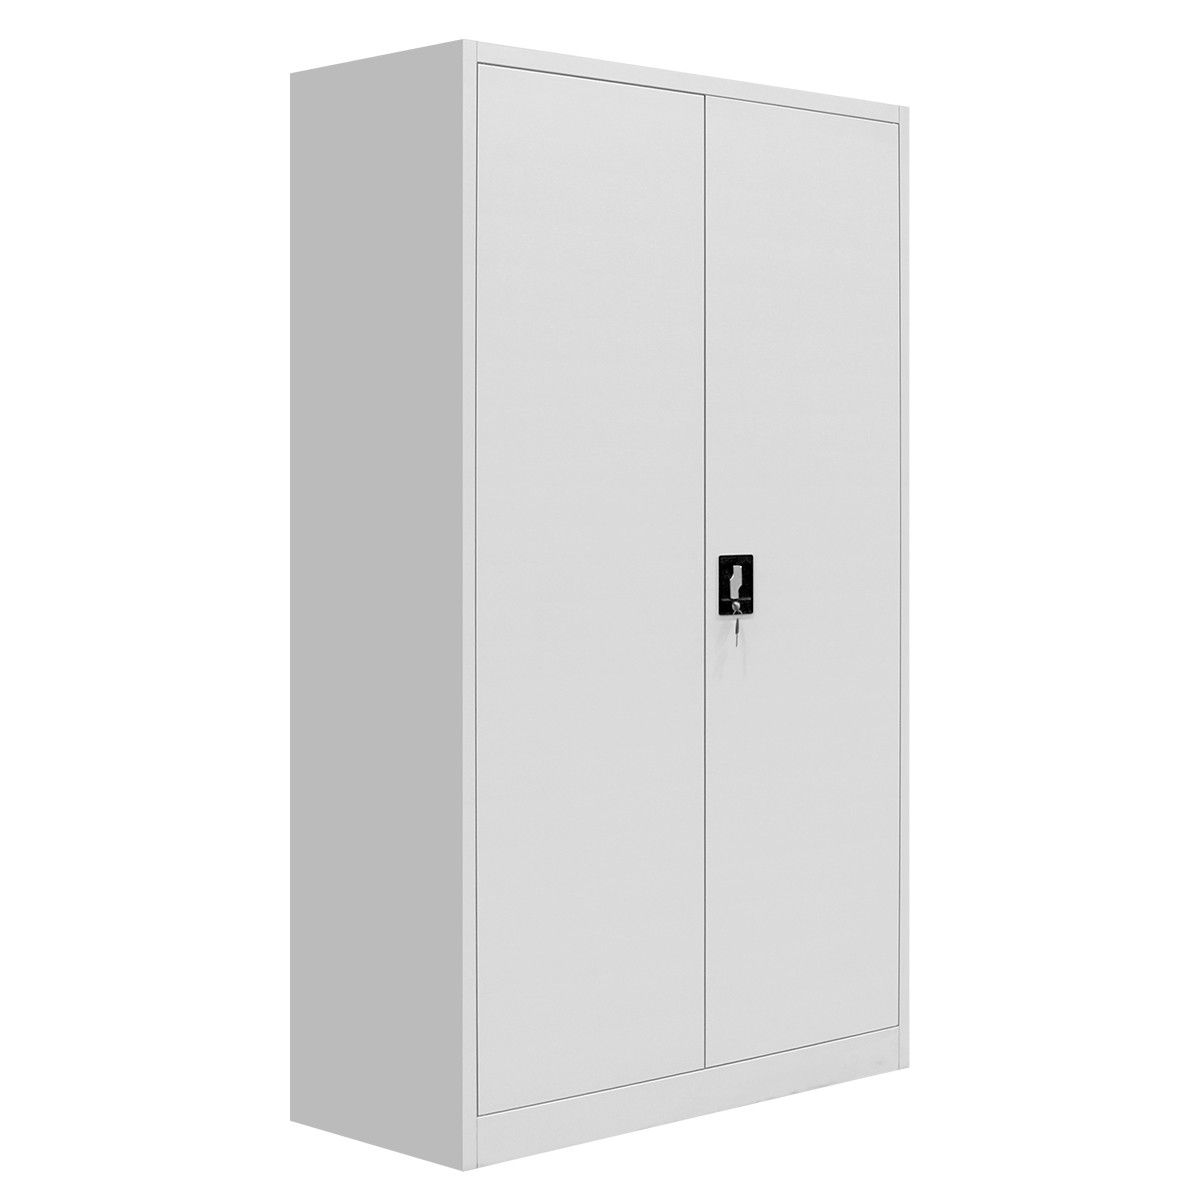 Steel Storage Cabinet Wardrobe Closet With Locks Buy Filing